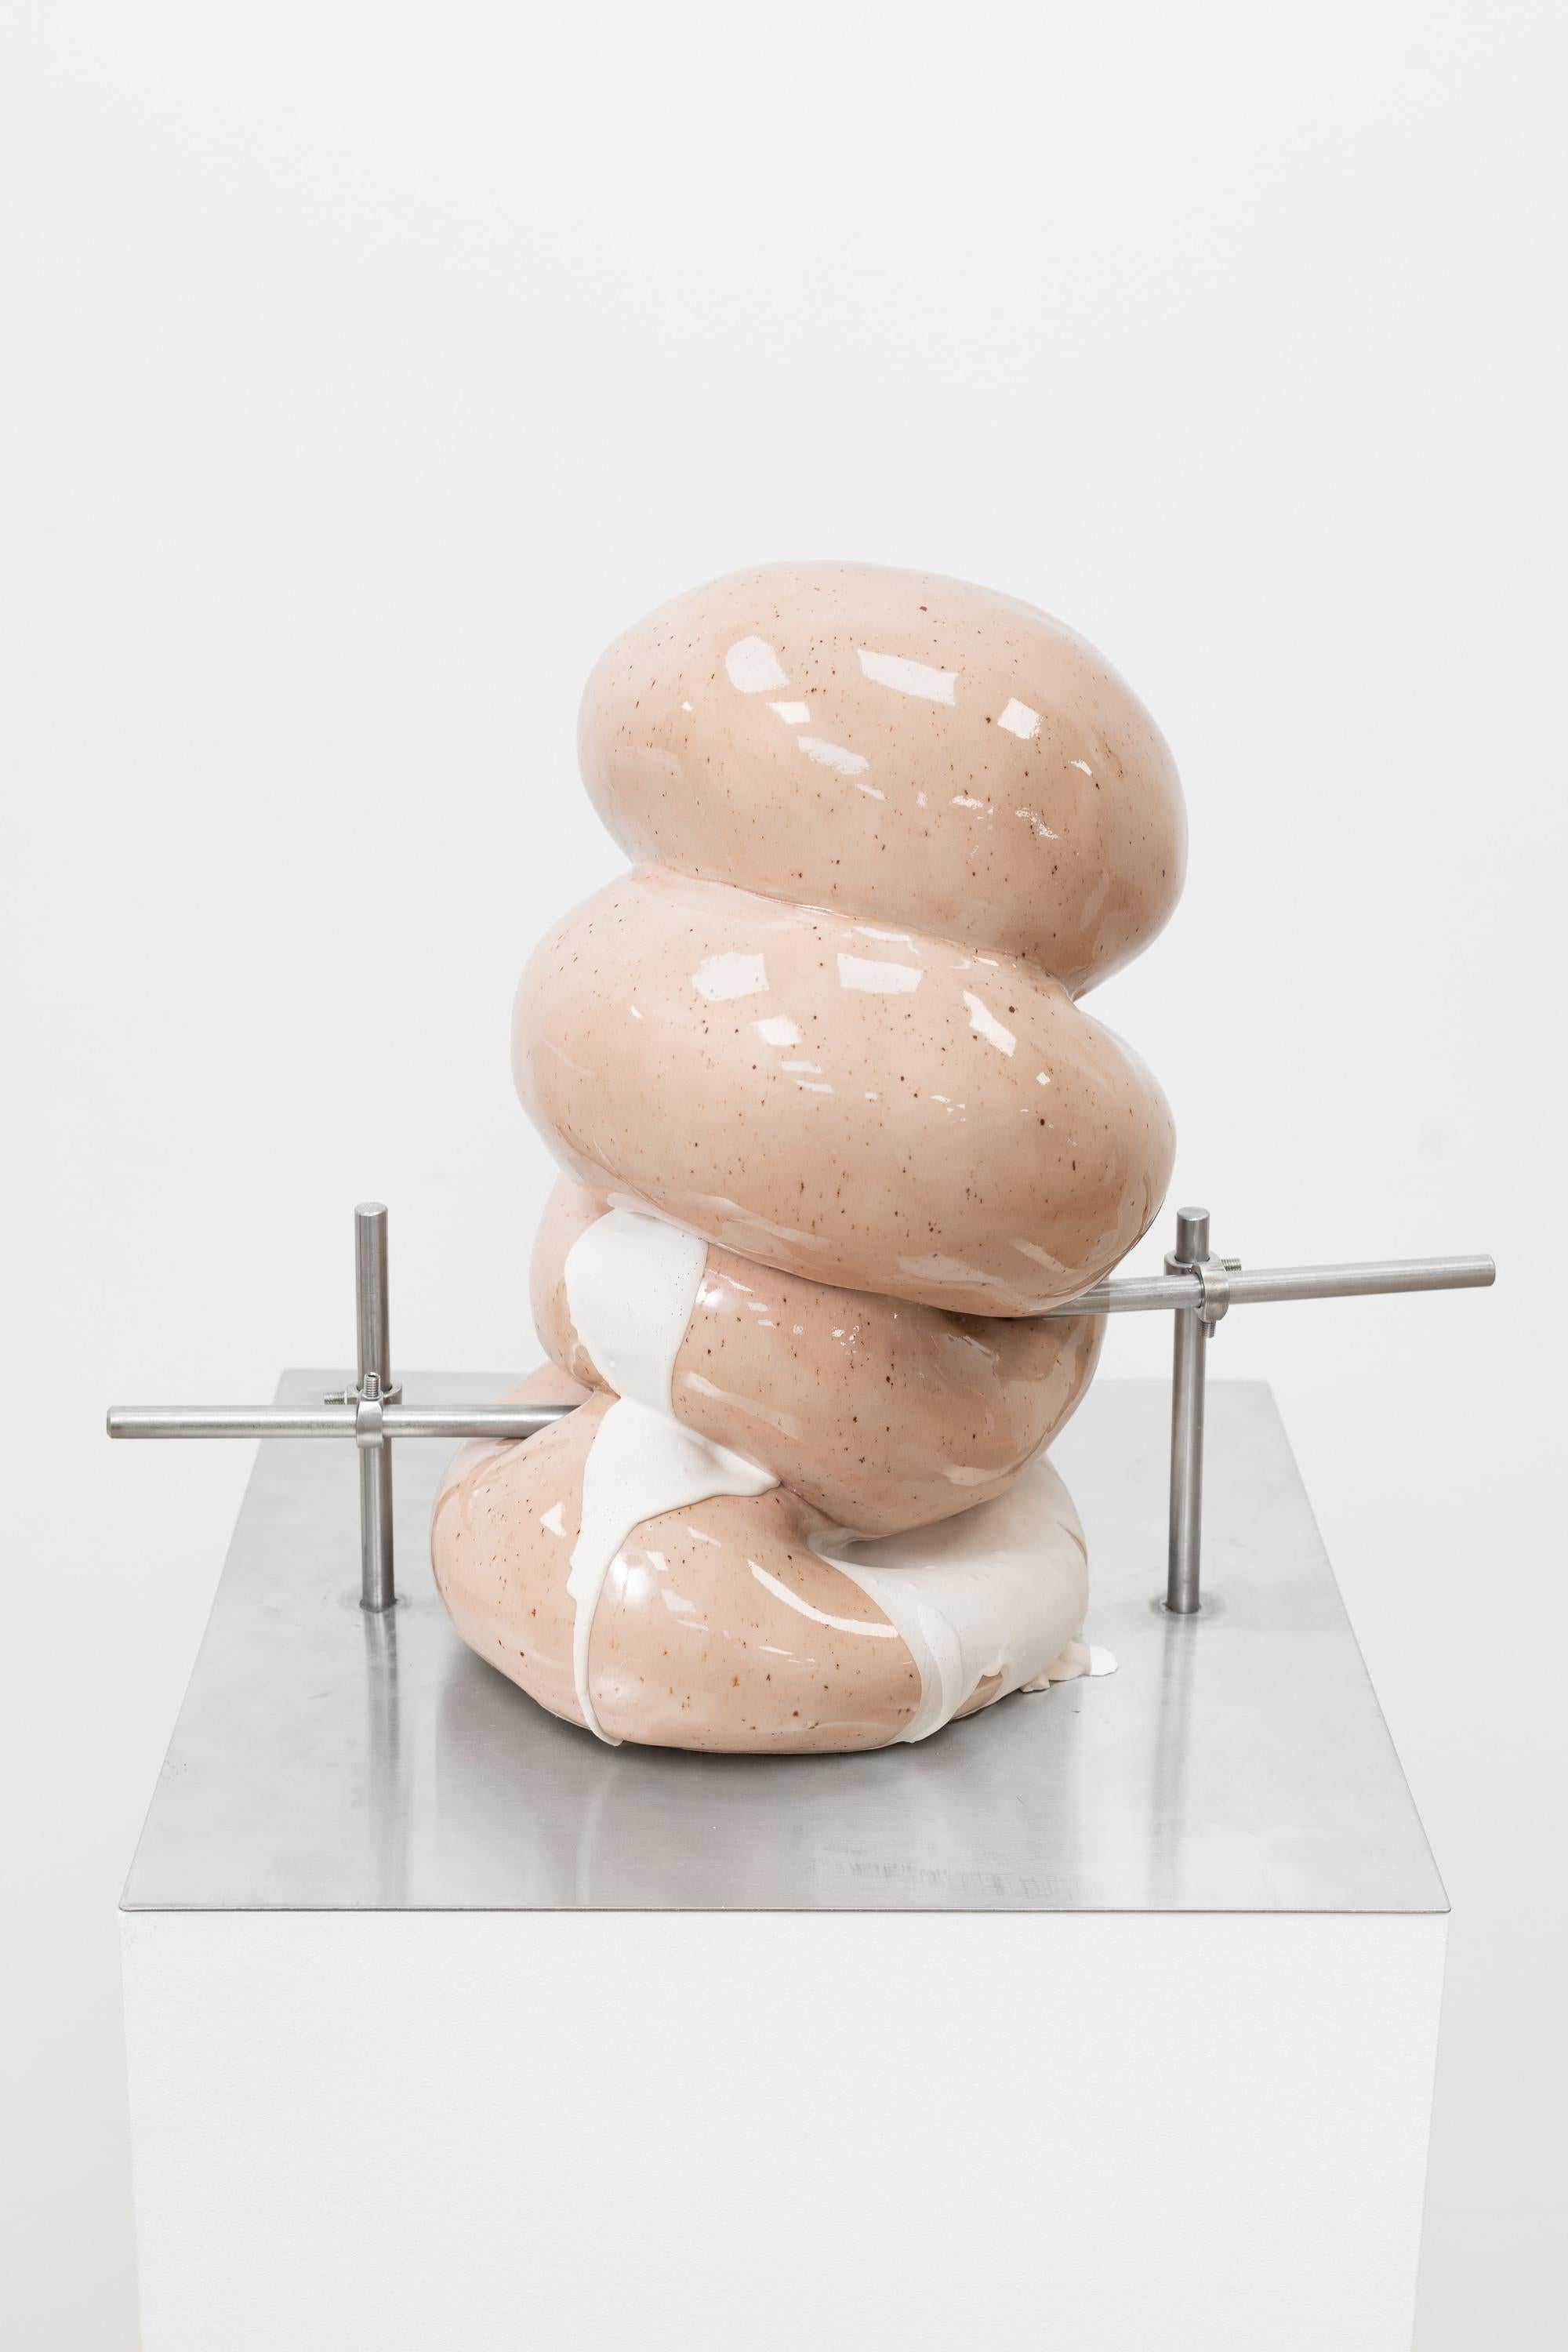 Erika Stöckel Abstract Sculpture – Unbenannt